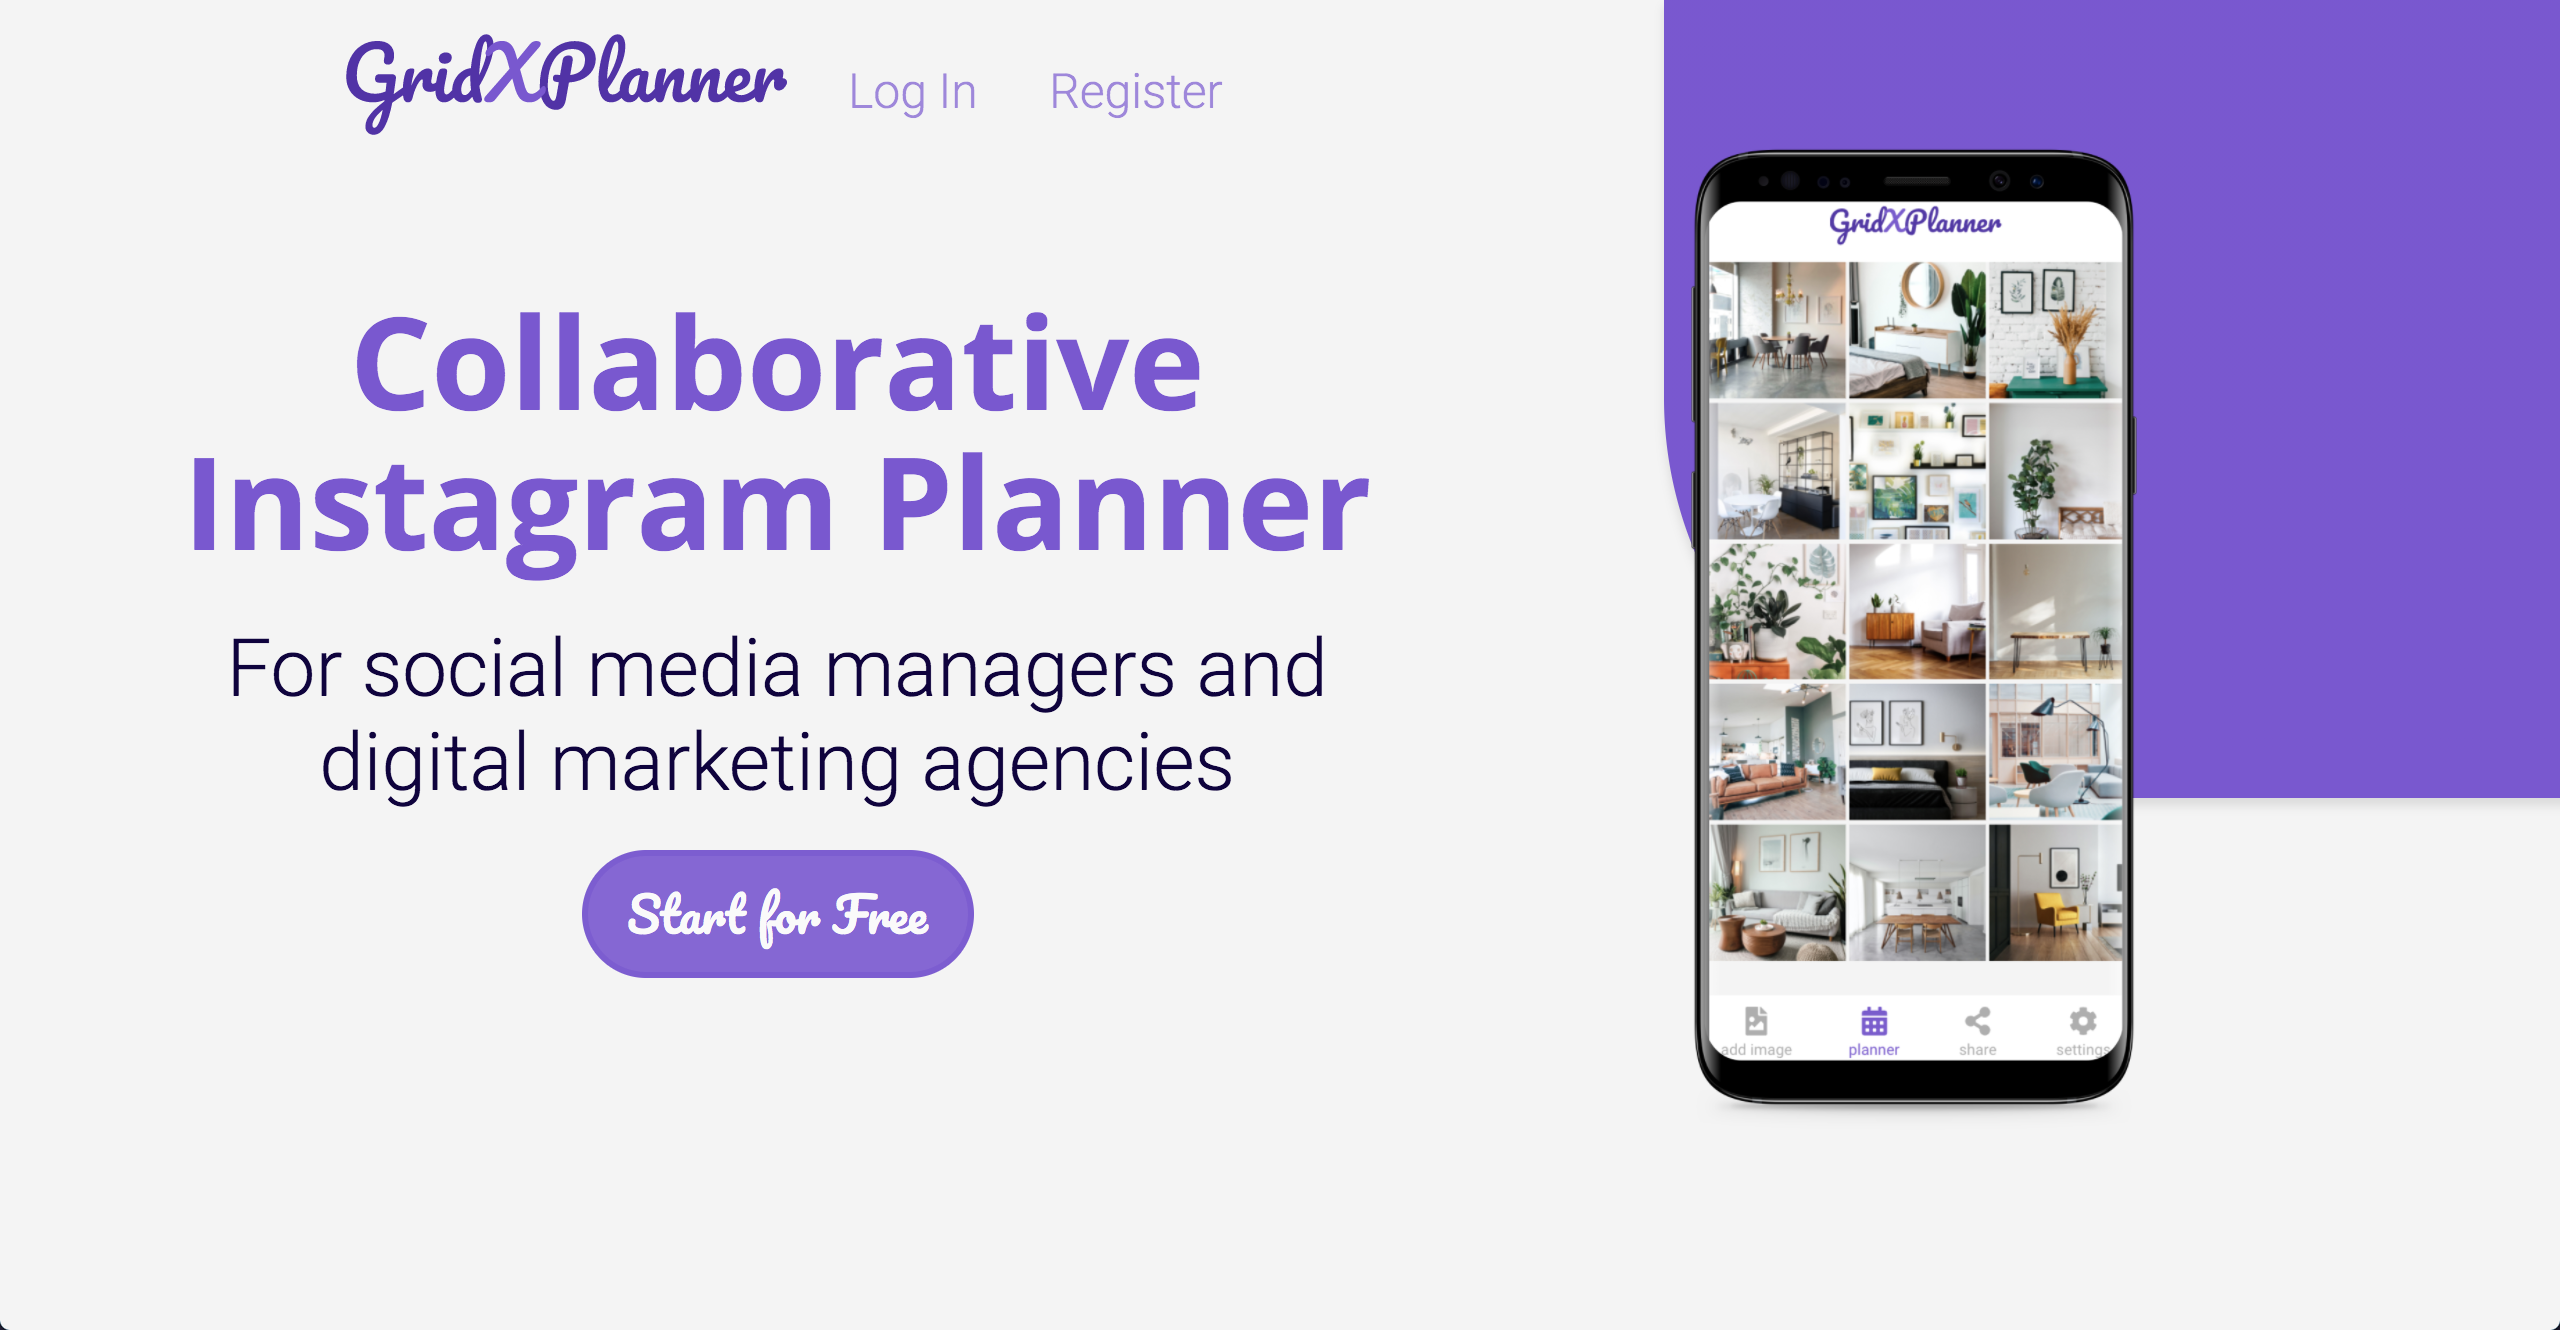 GridxPlanner - Collaborative Instagram Planner